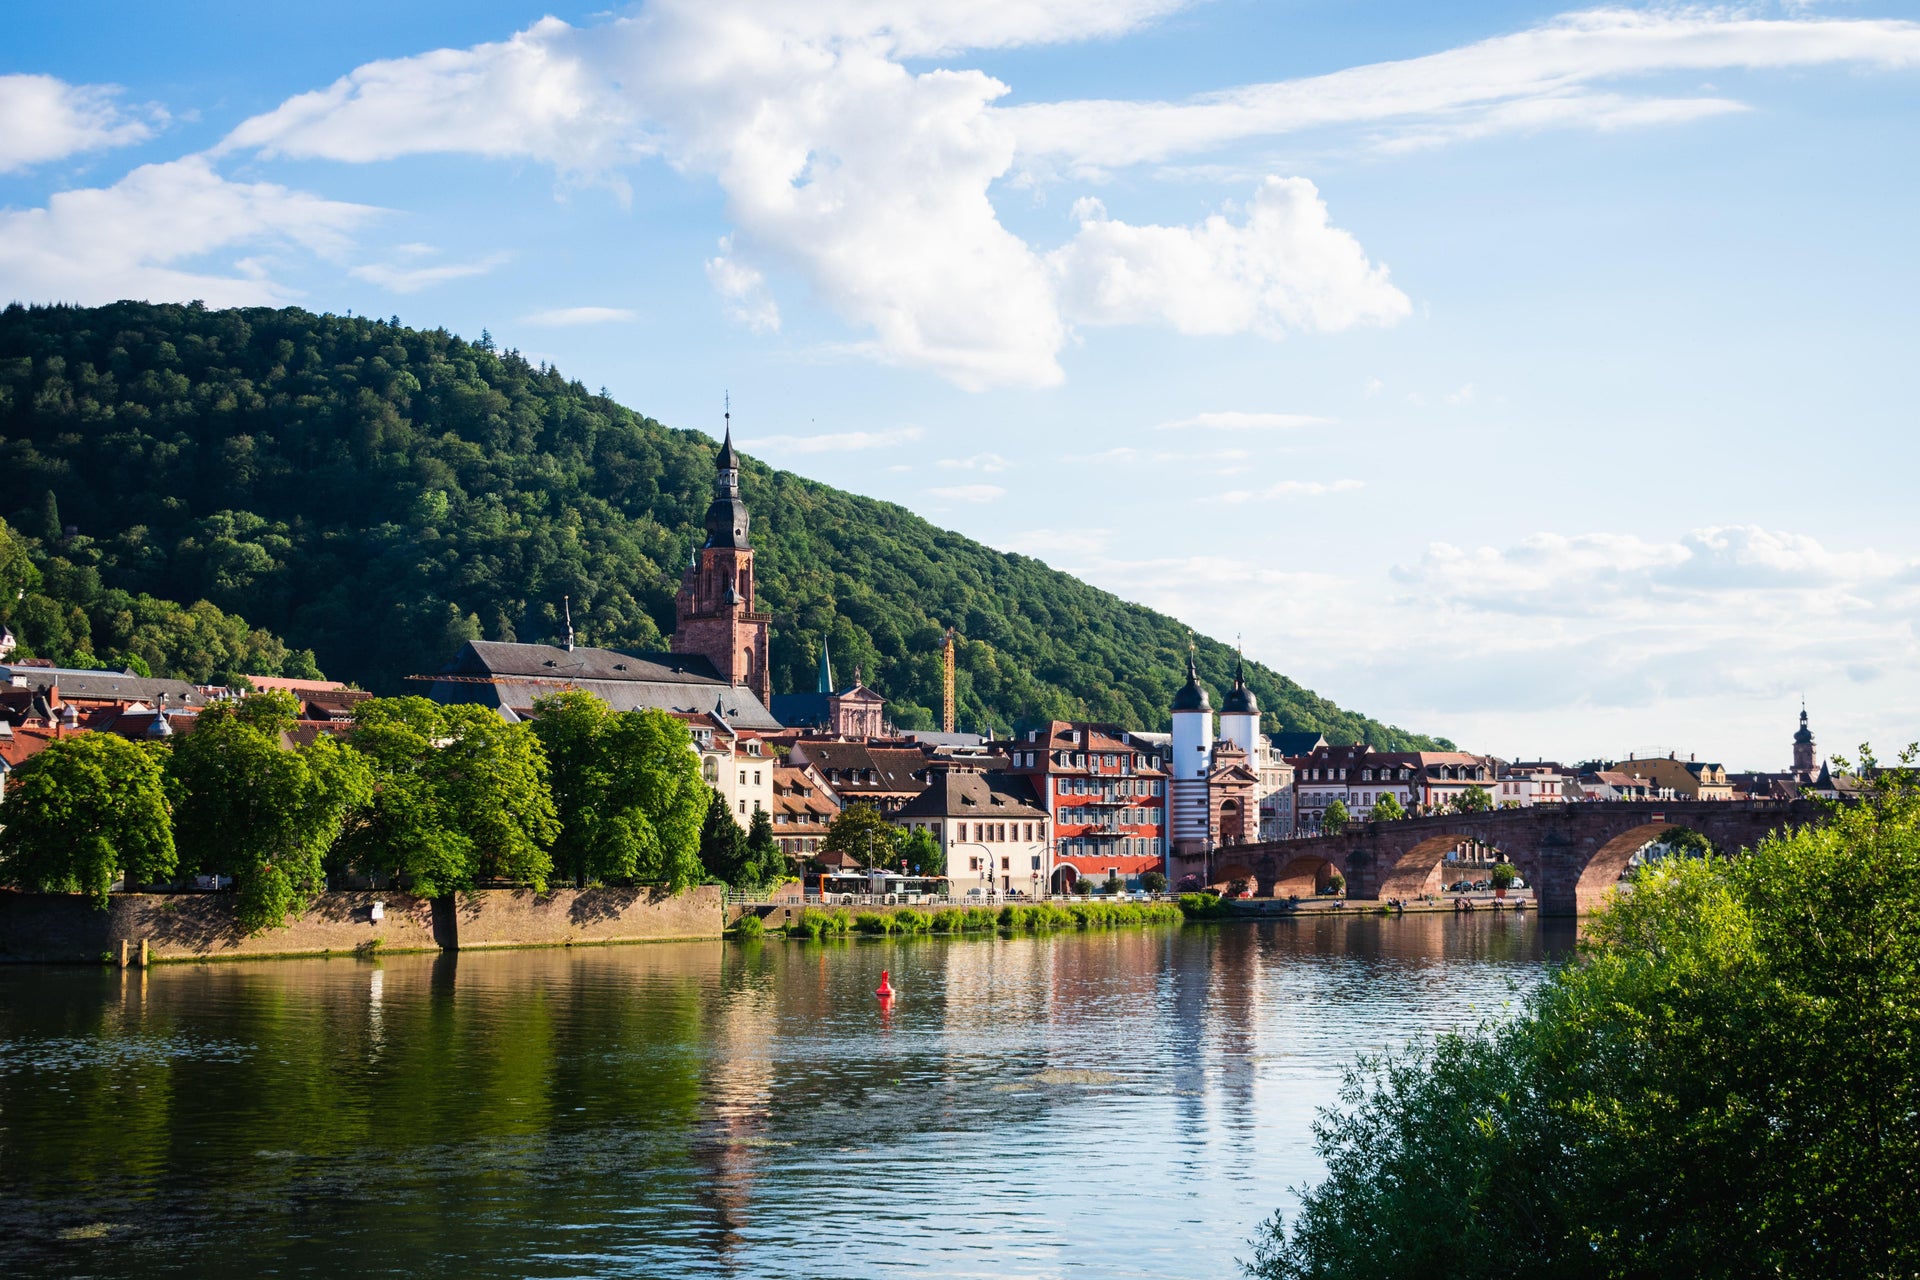 Private Tour of Heidelberg